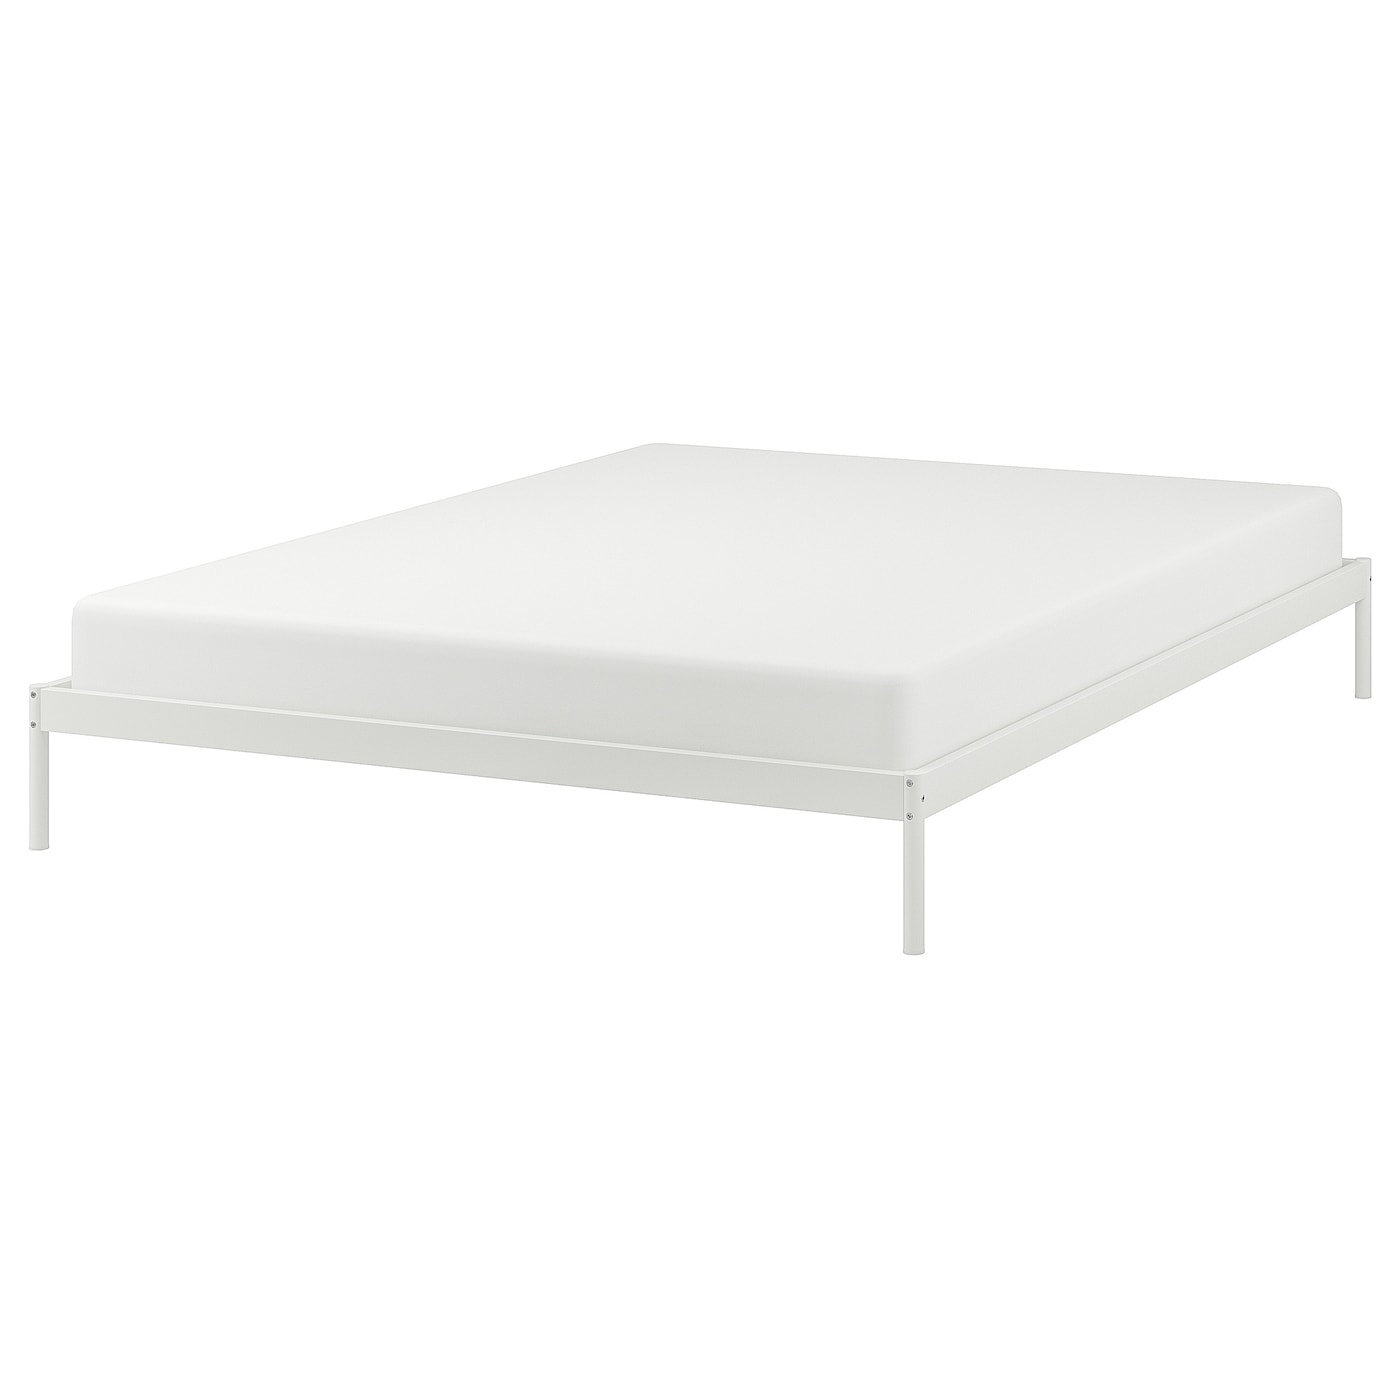 Каркас кровати - IKEA VEVELSTAD, 200х140 см, белый, ВЕВЕЛСТАД ИКЕА